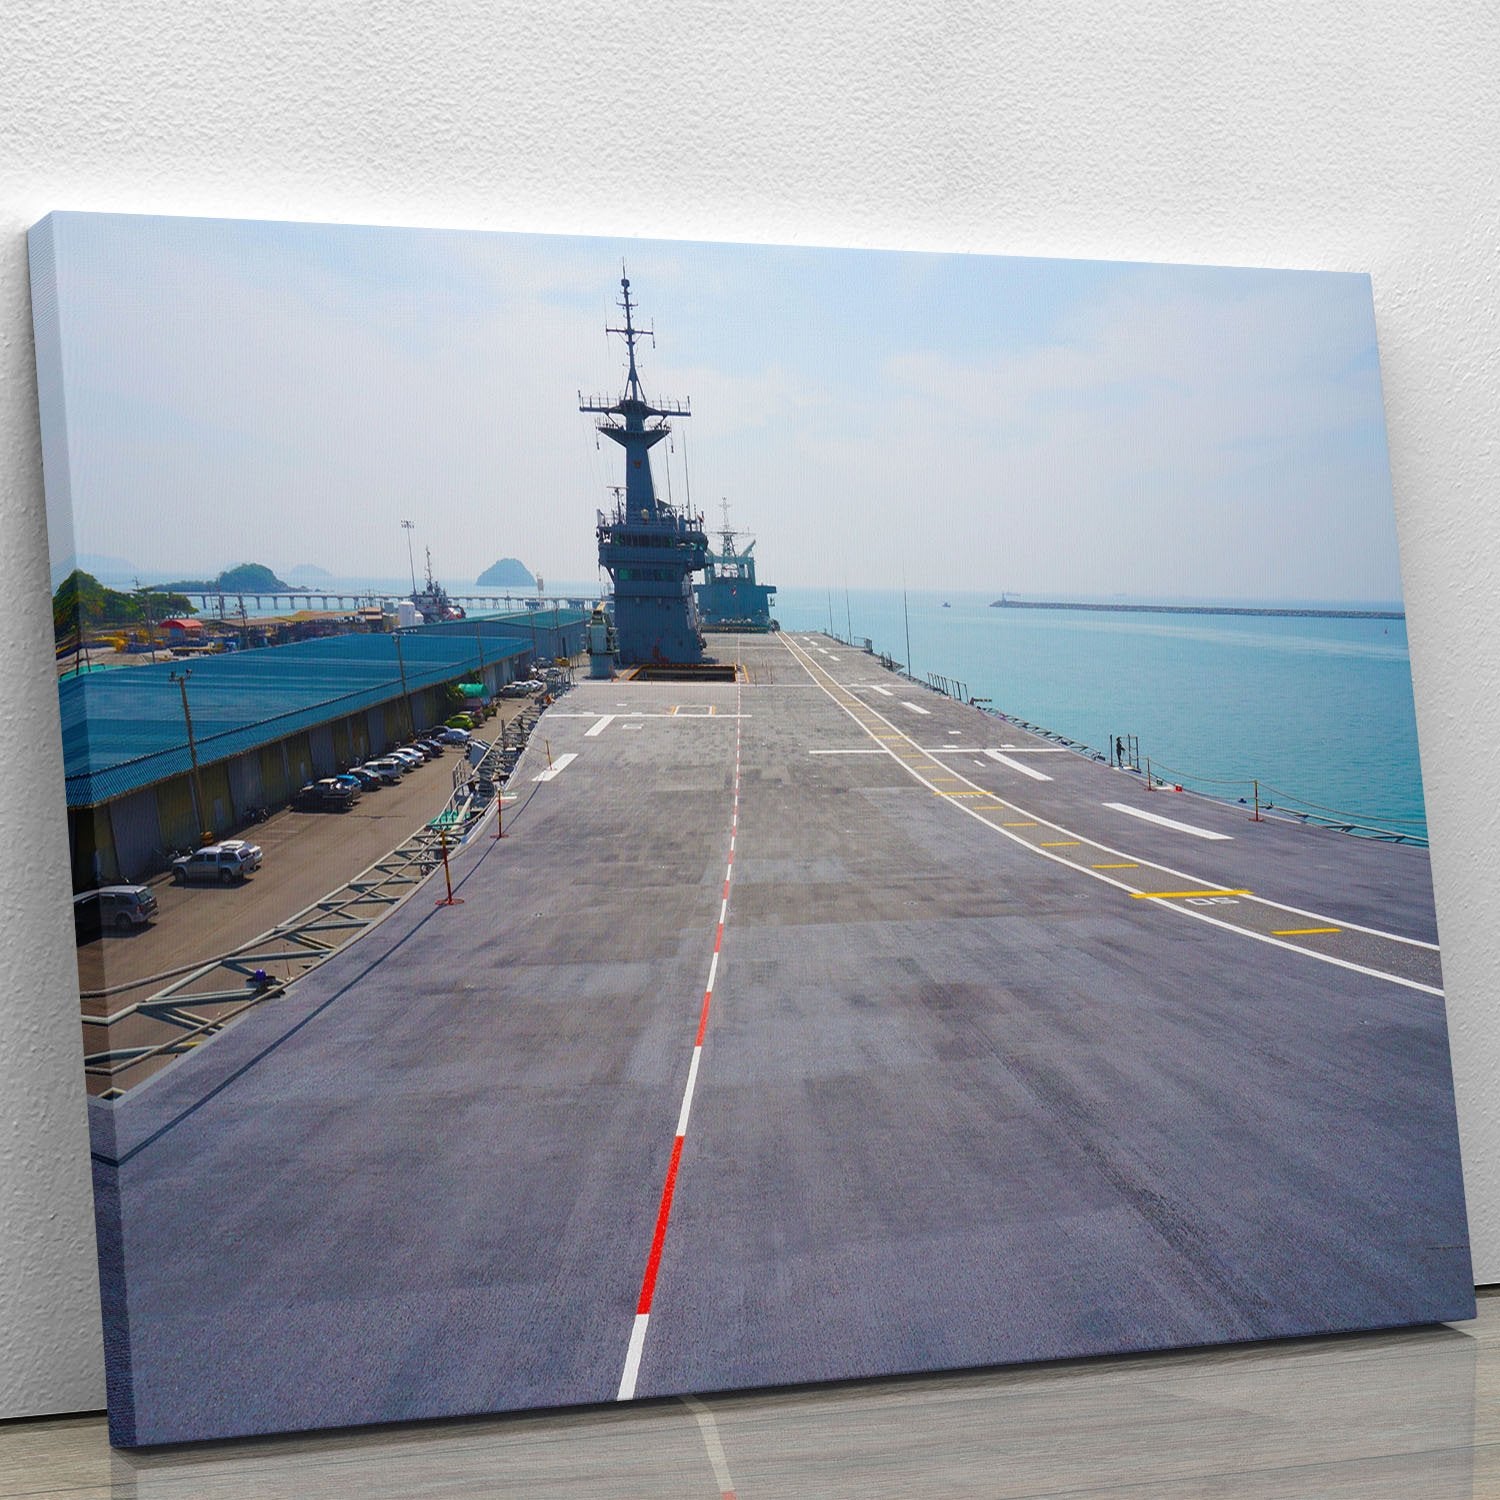 Flight deck of an aircraft carrier Canvas Print or Poster